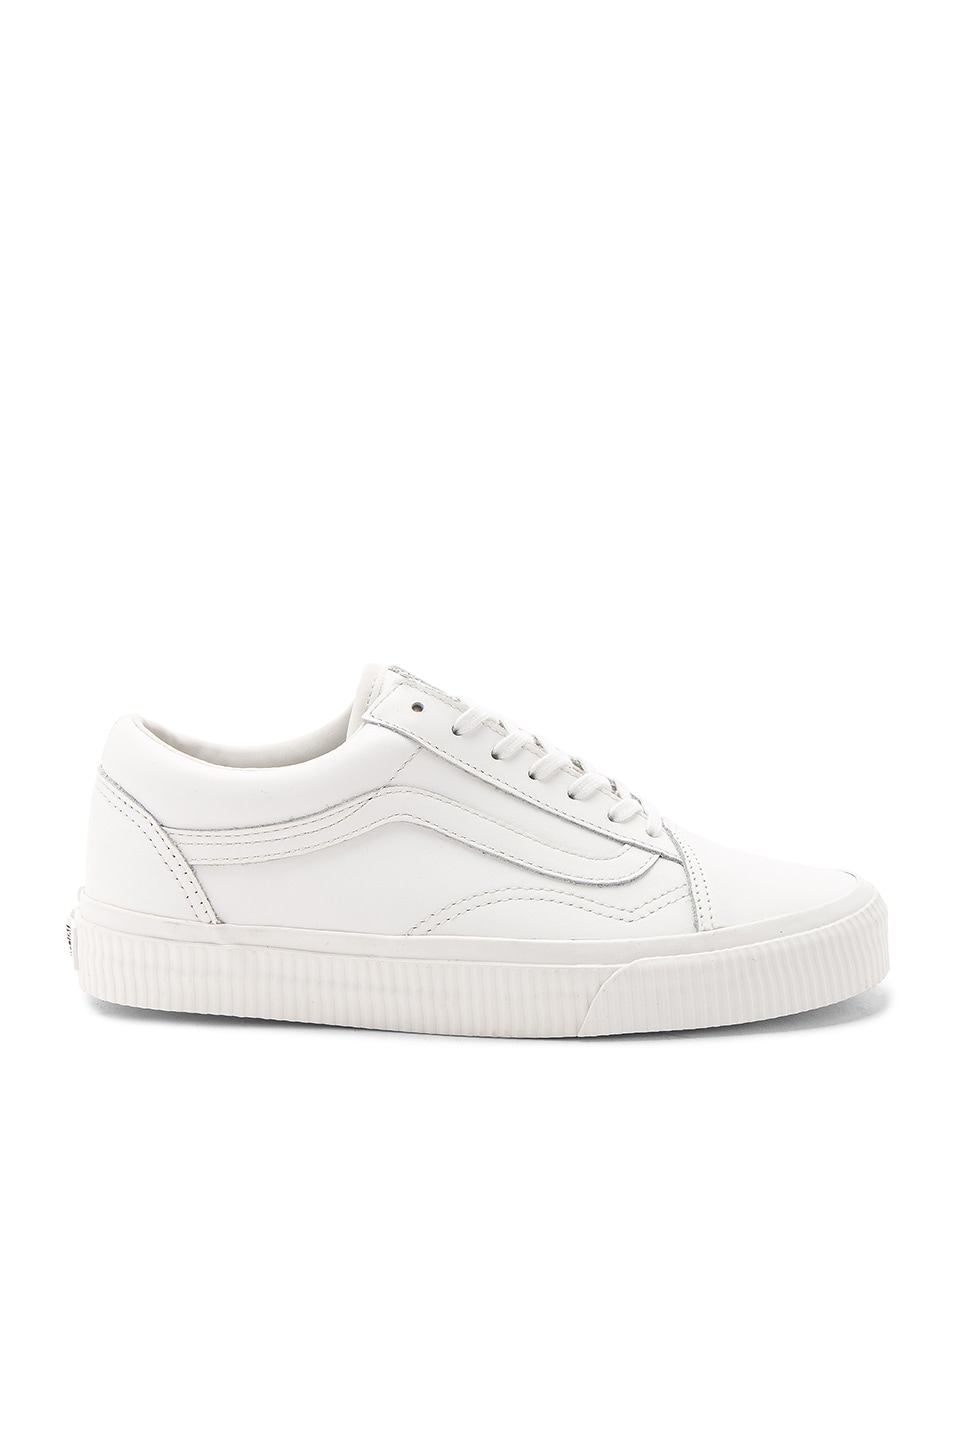 Vans Old Skool Sneaker in Blanc de Blanc | REVOLVE